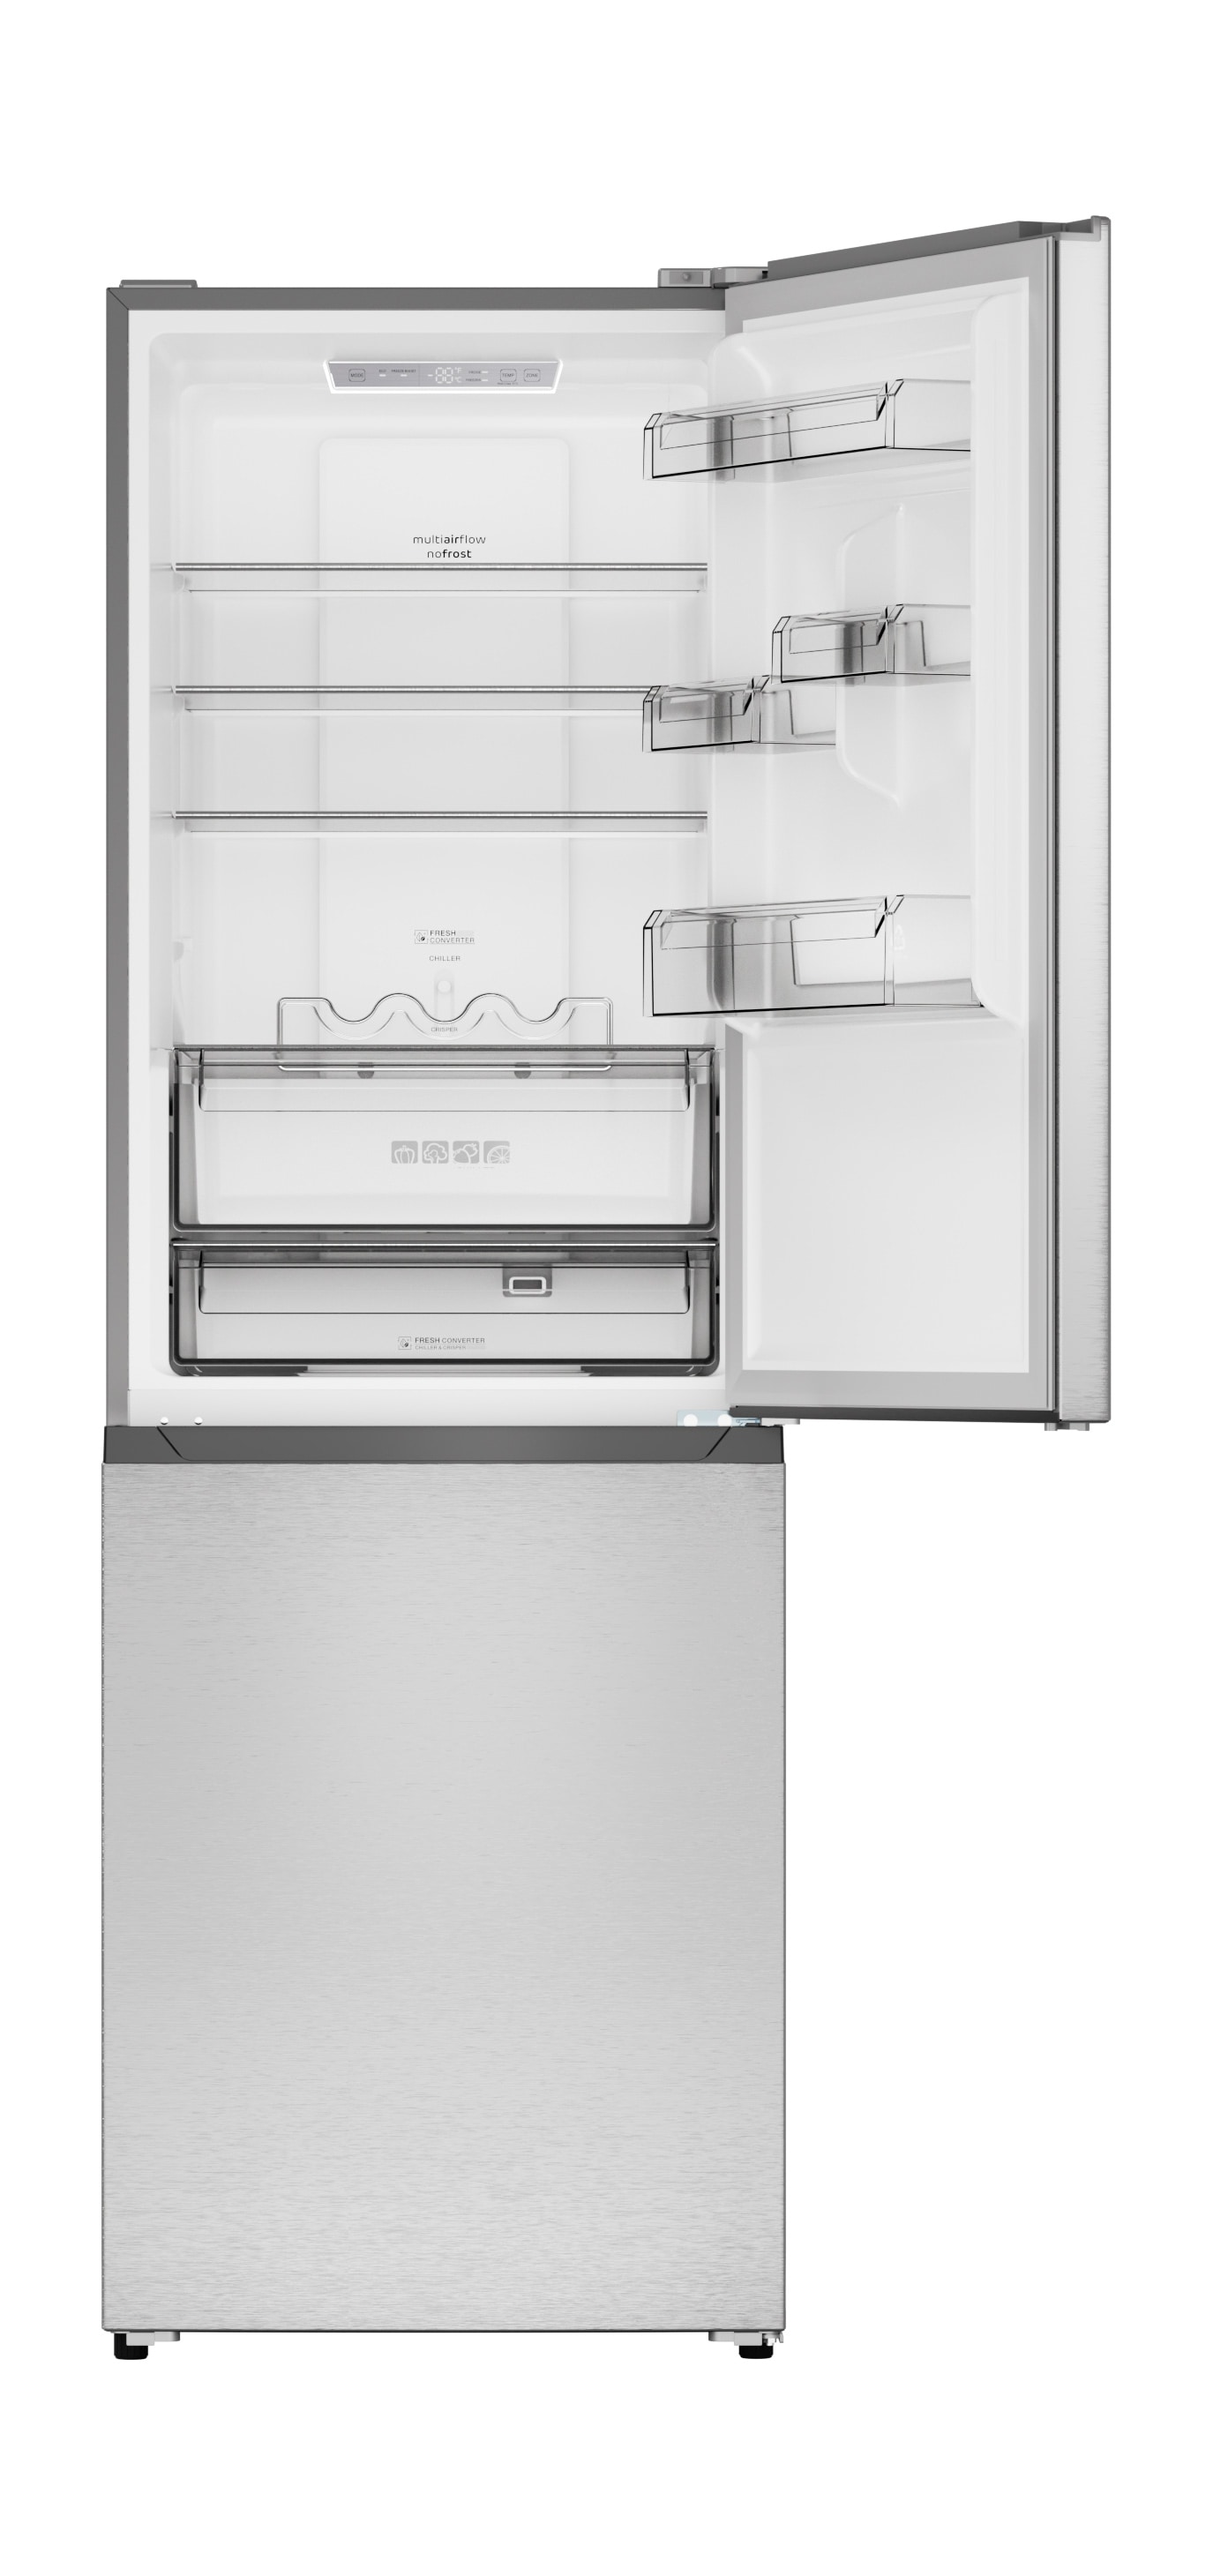 Sharp 11.5-cu the STAR ENERGY Refrigerator (Stainless in Refrigerators ft at Bottom-Freezer Steel) department Bottom-Freezer